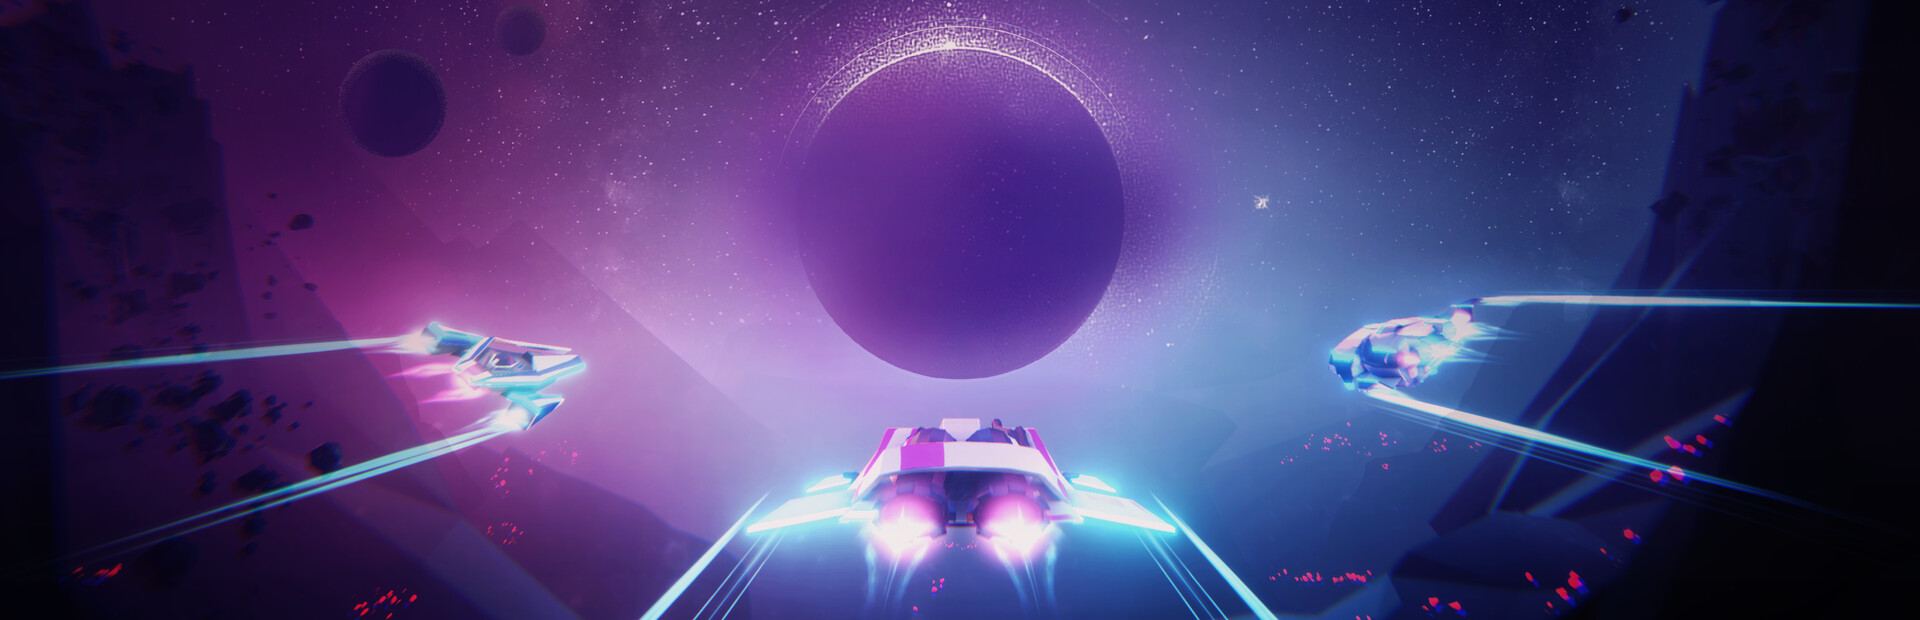 Invector: Rhythm Galaxy cover image